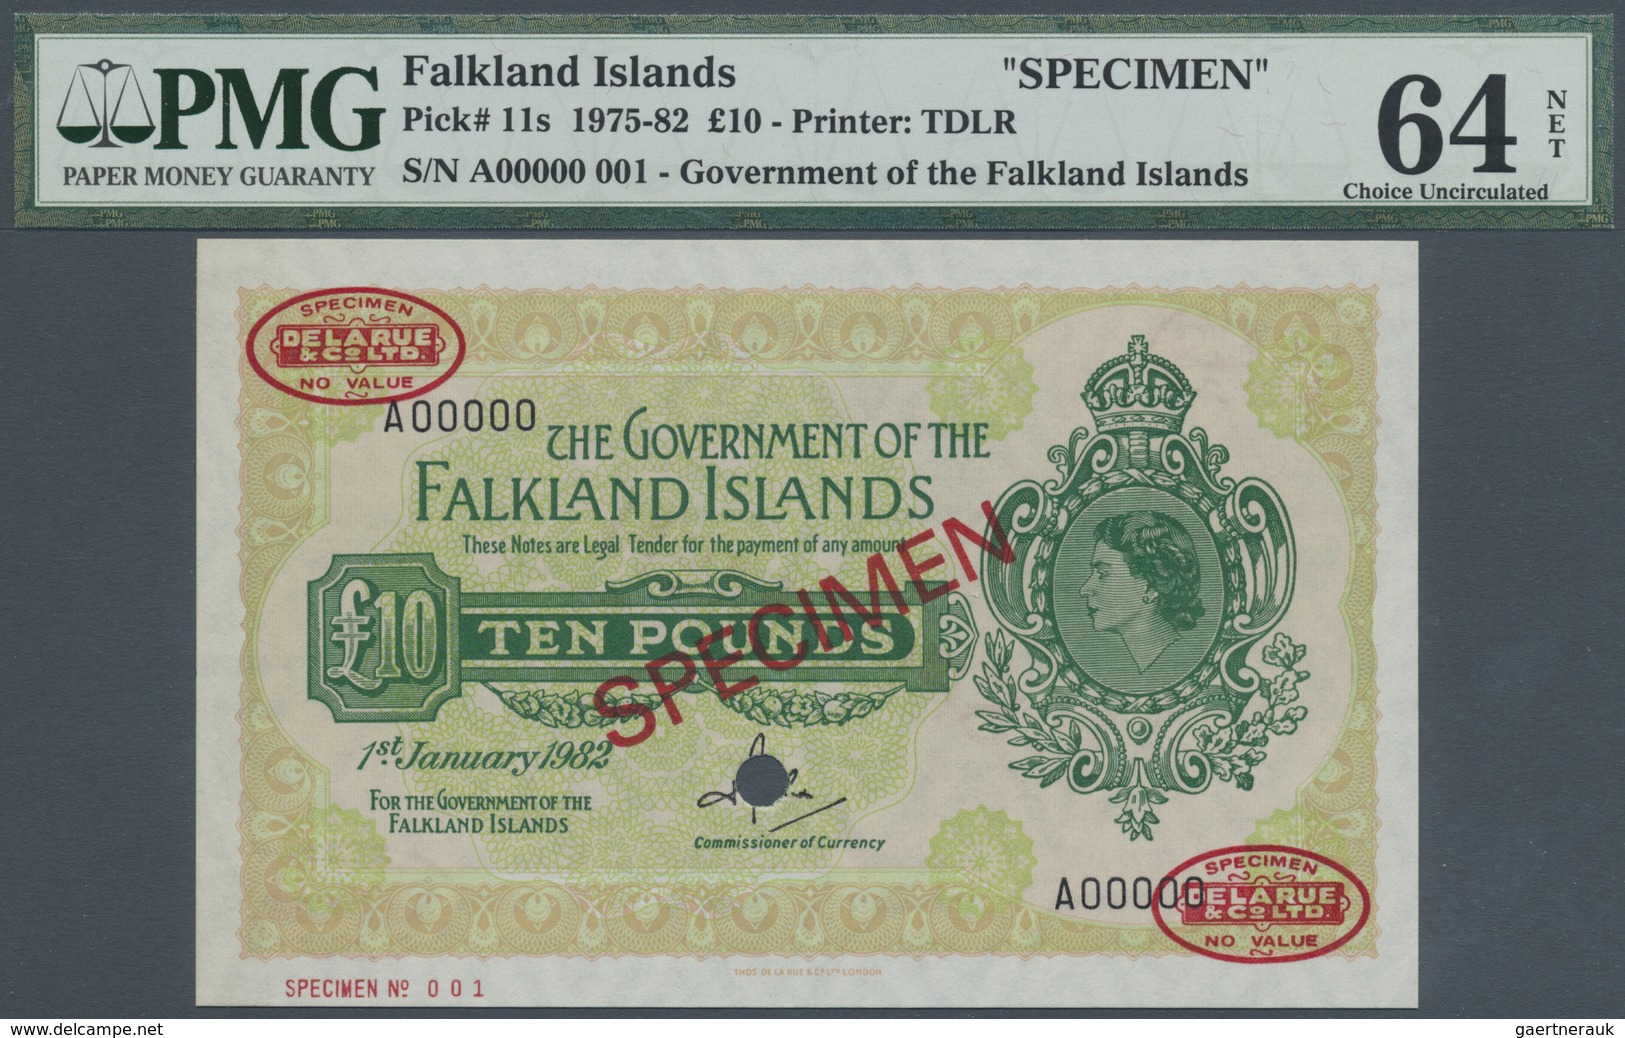 Falkland Islands / Falkland Inseln: 10 Pounds 1975-82 TDLR Specimen No.001 A 00000, P.11s PMG 64 Cho - Falkland Islands